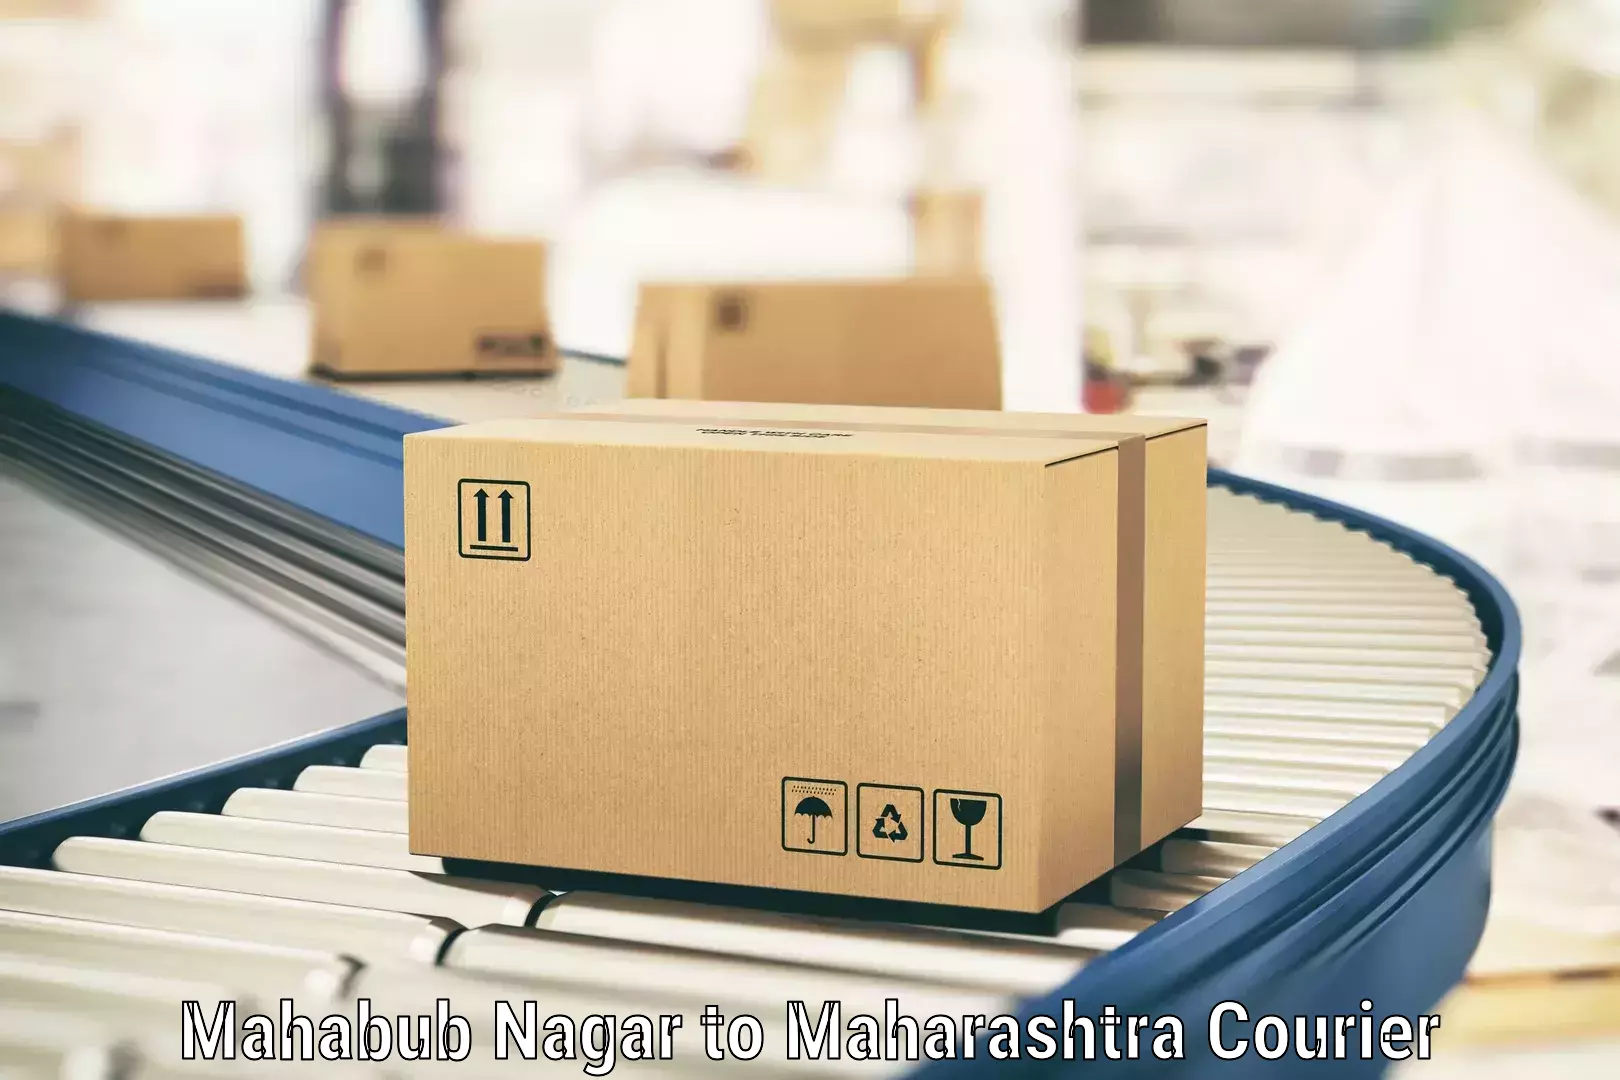 Professional courier handling Mahabub Nagar to Mumbai